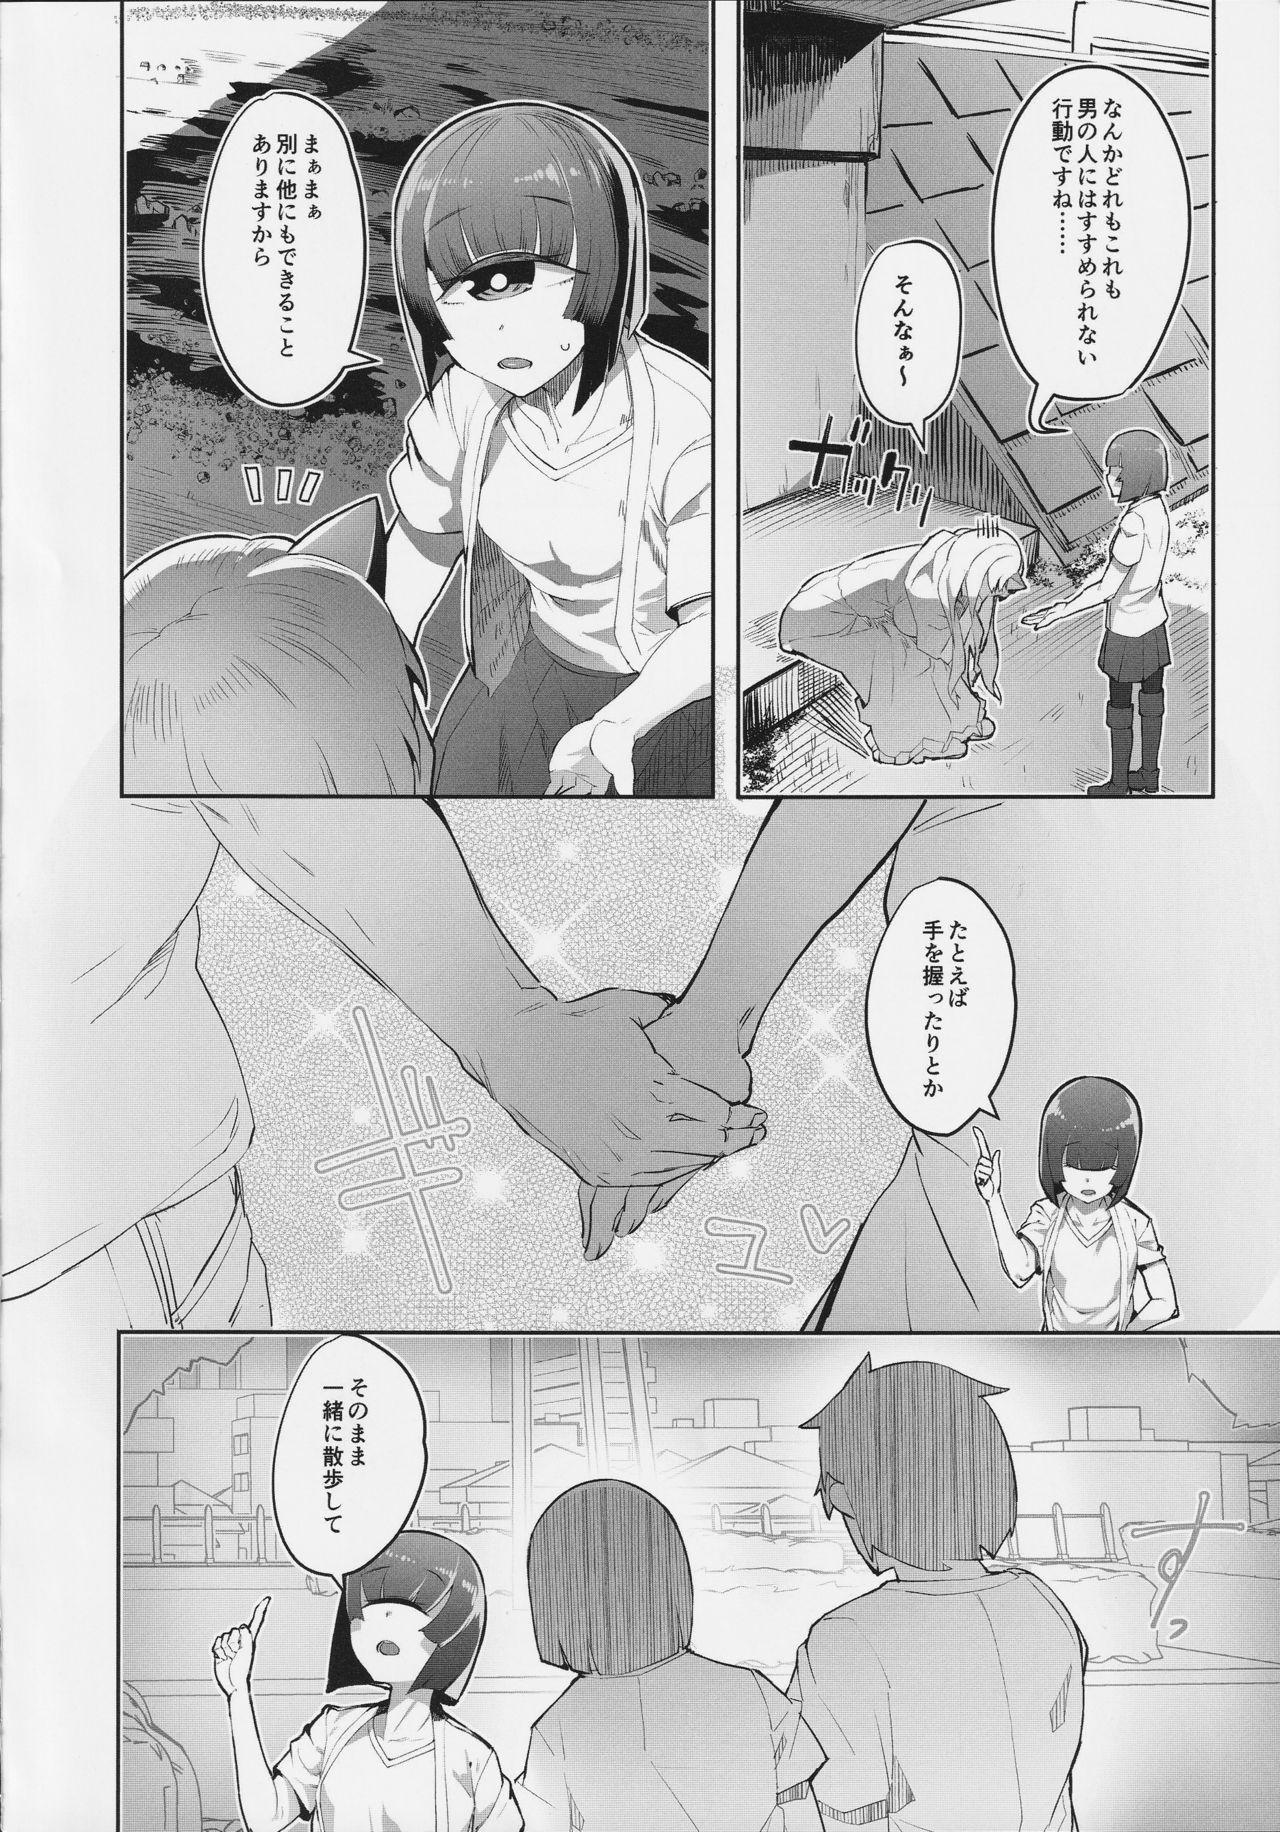 Sub Monster Musume no Iru Nichijou SS ANTHOLOGY - Everyday Life with Monster Girls - Monster musume no iru nichijou Ikillitts - Page 9